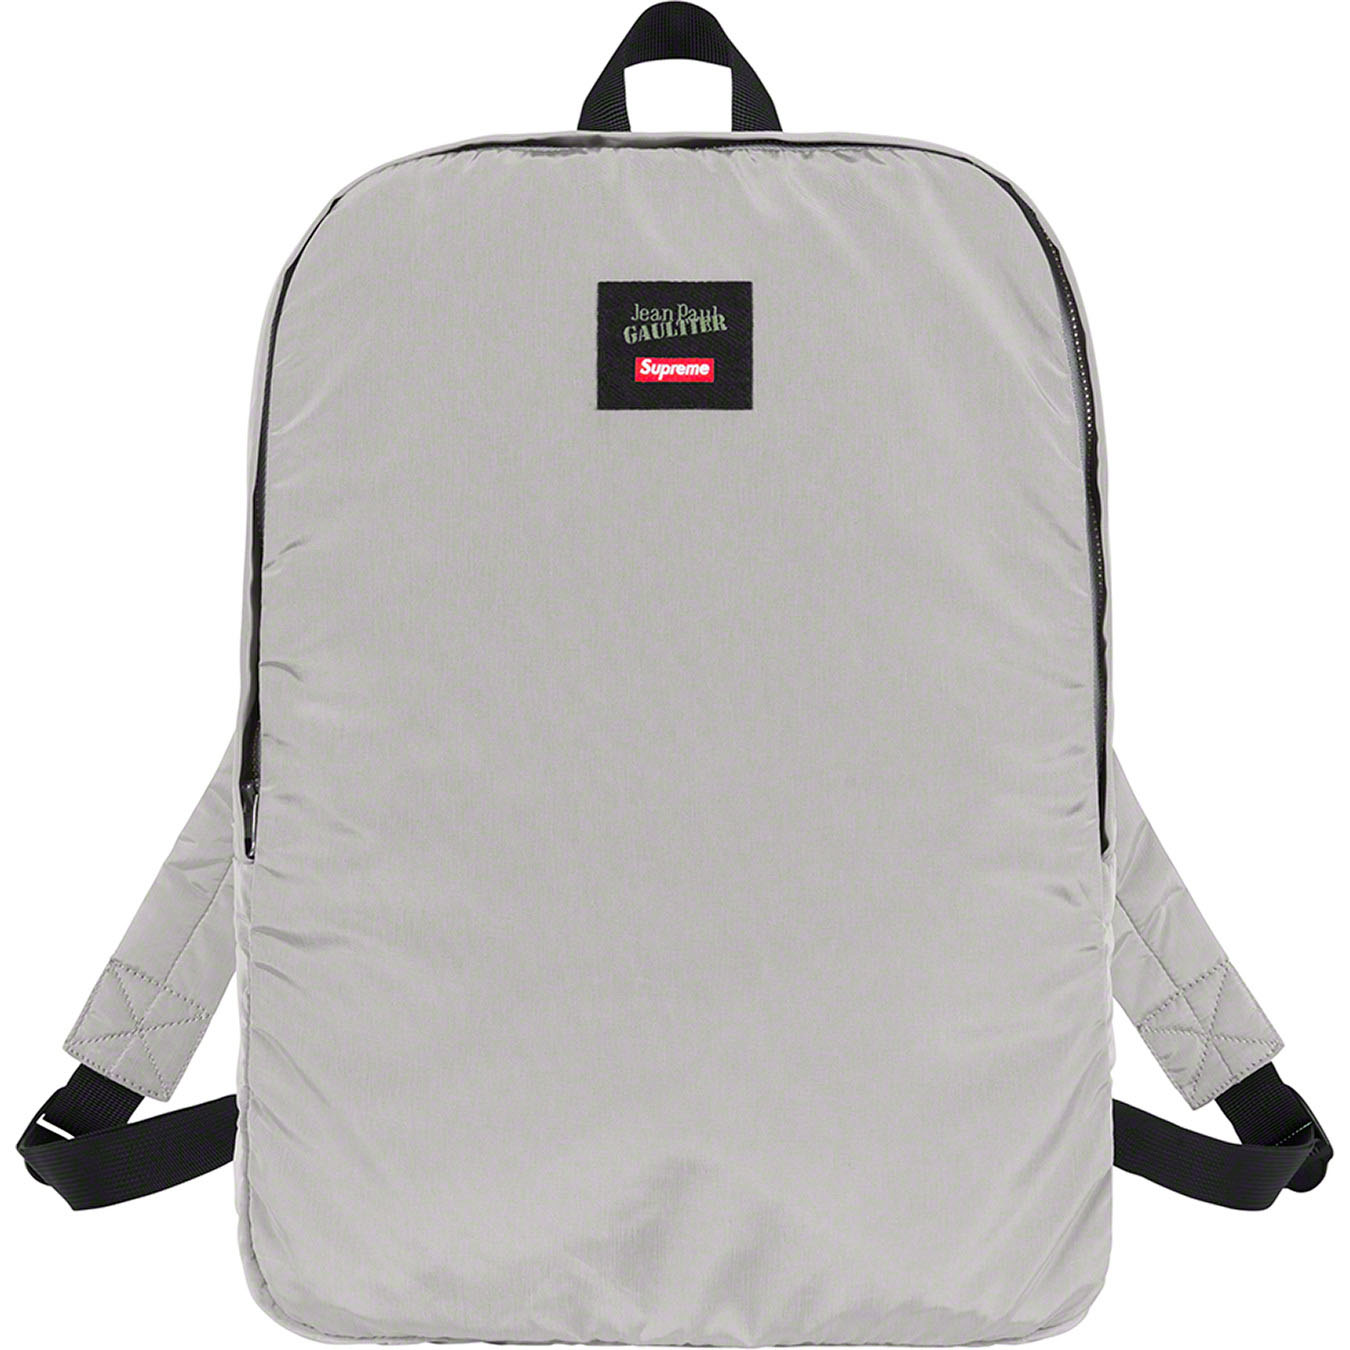 Supreme®/Jean Paul Gaultier® Reversible Backpack MA-1